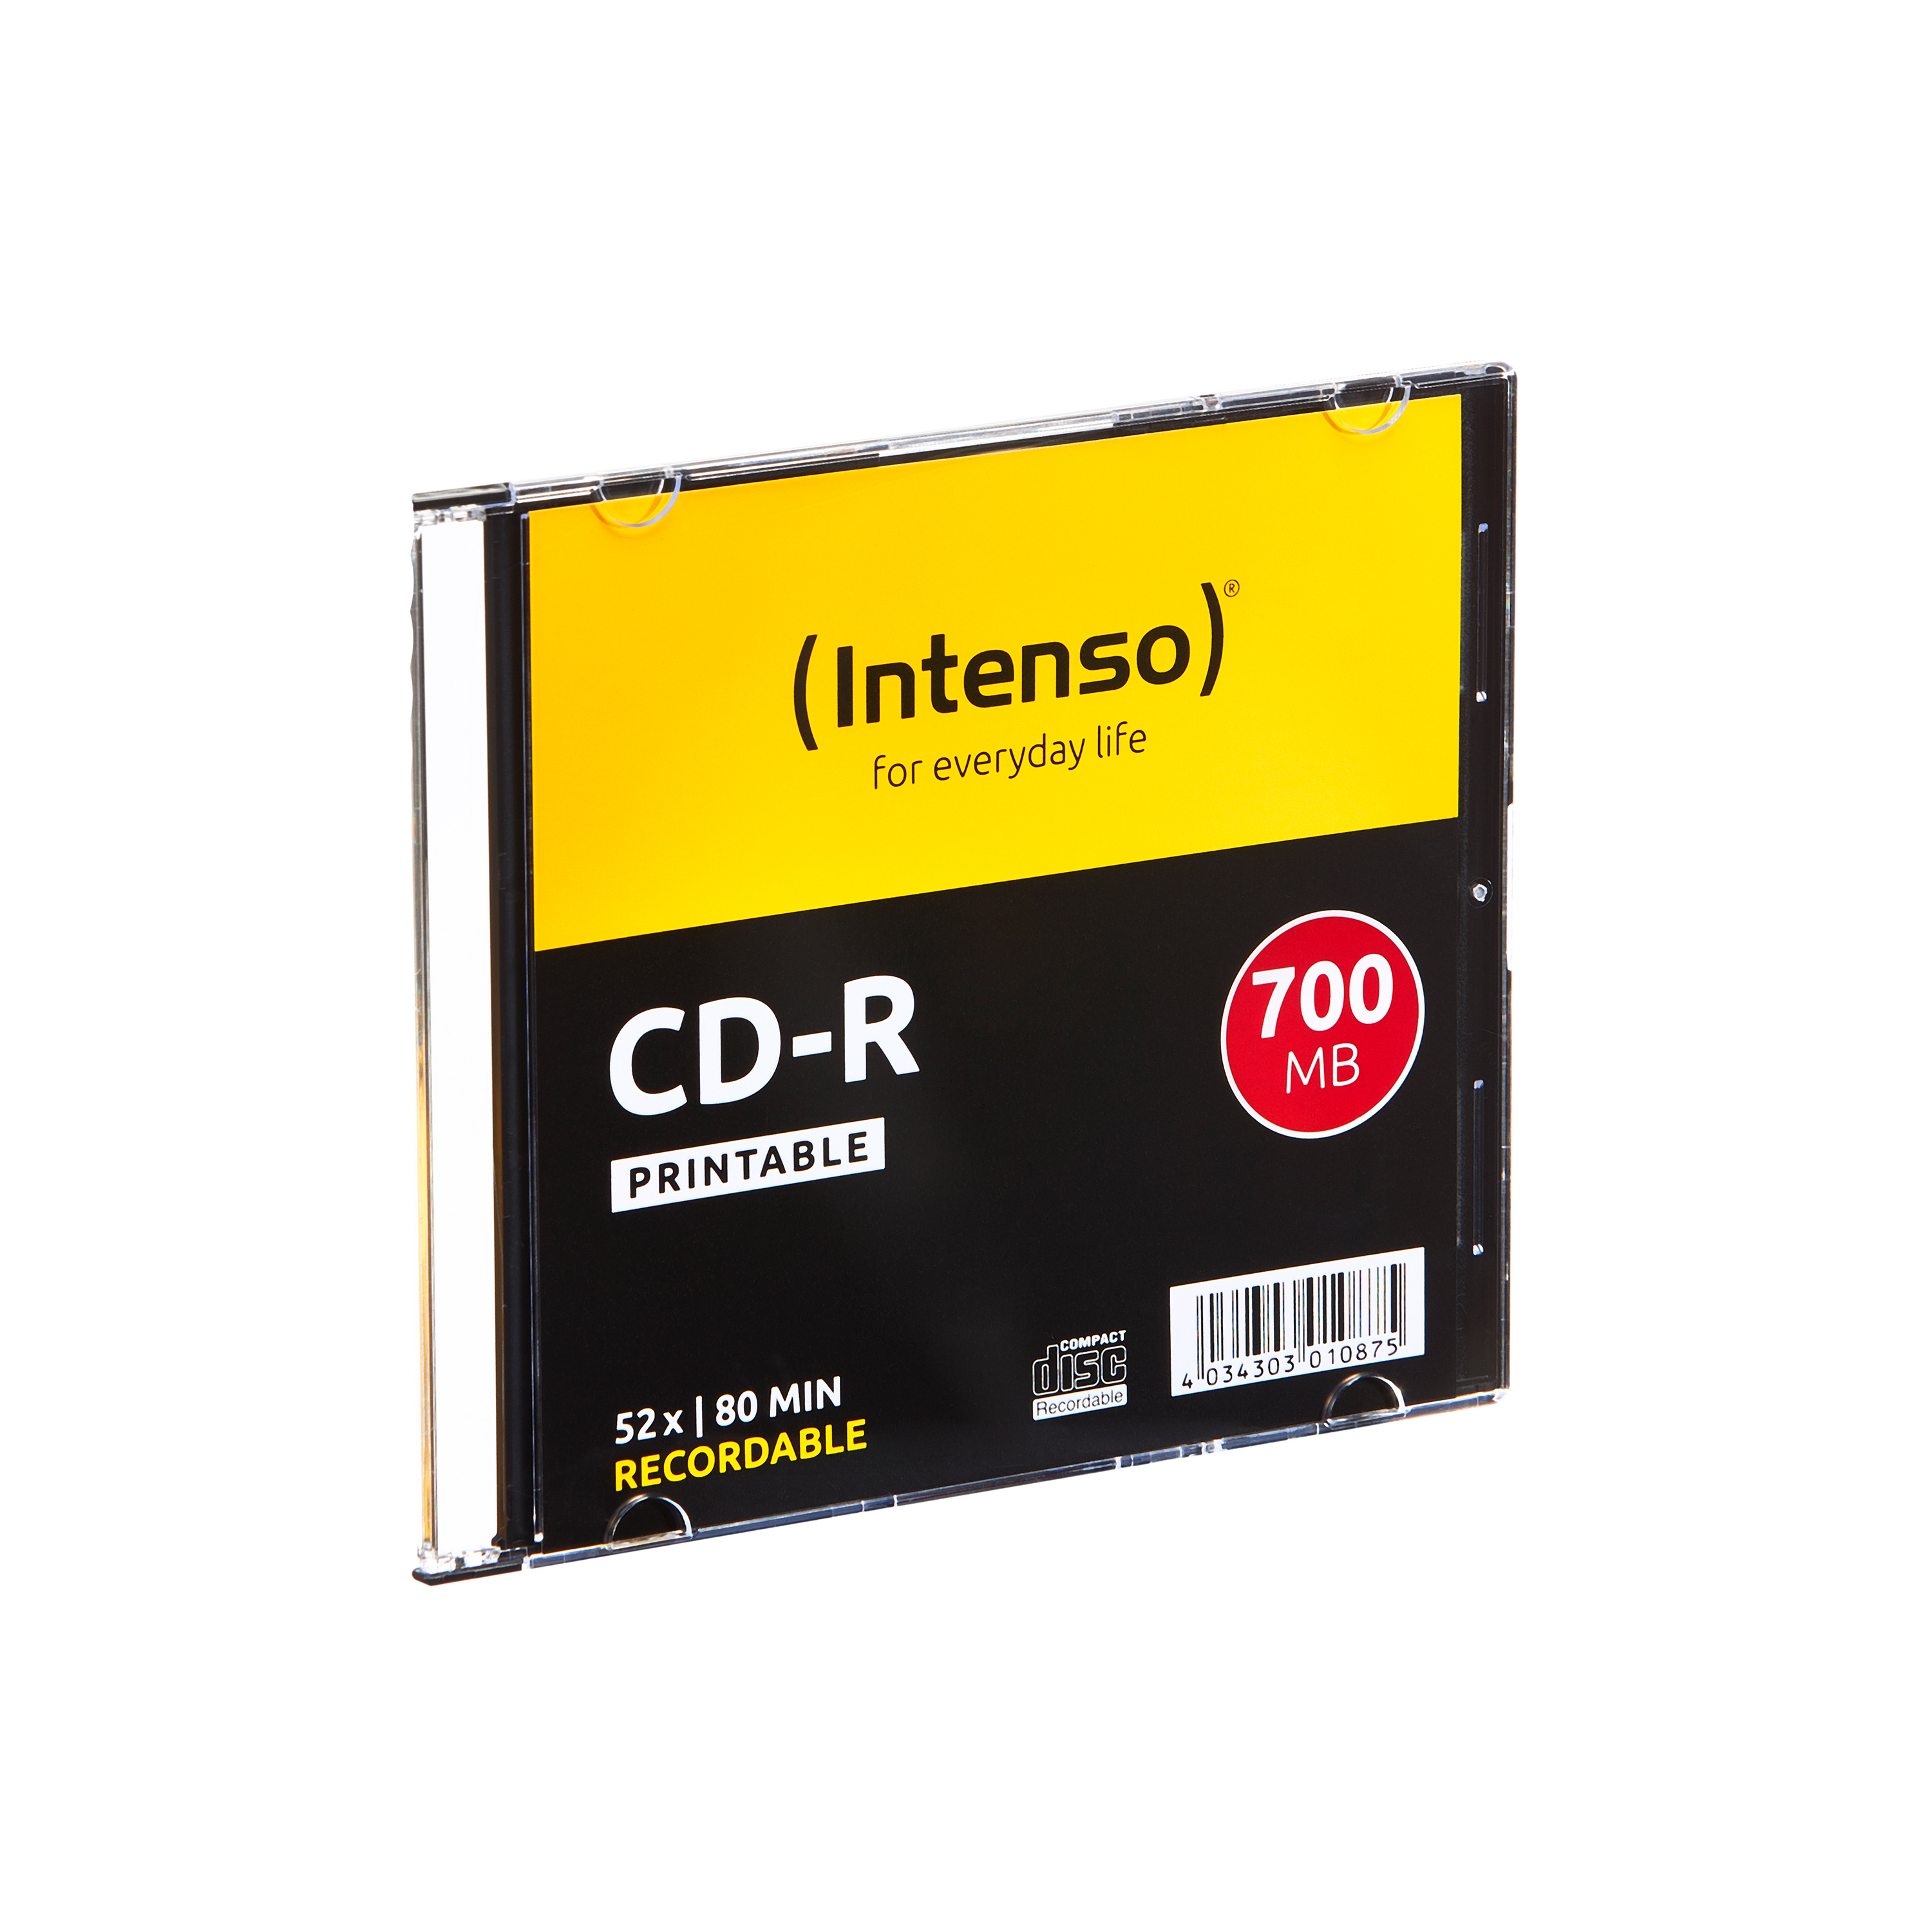 CD-R  Intenso 700MB  10pcs SlimCaseprintable  52x